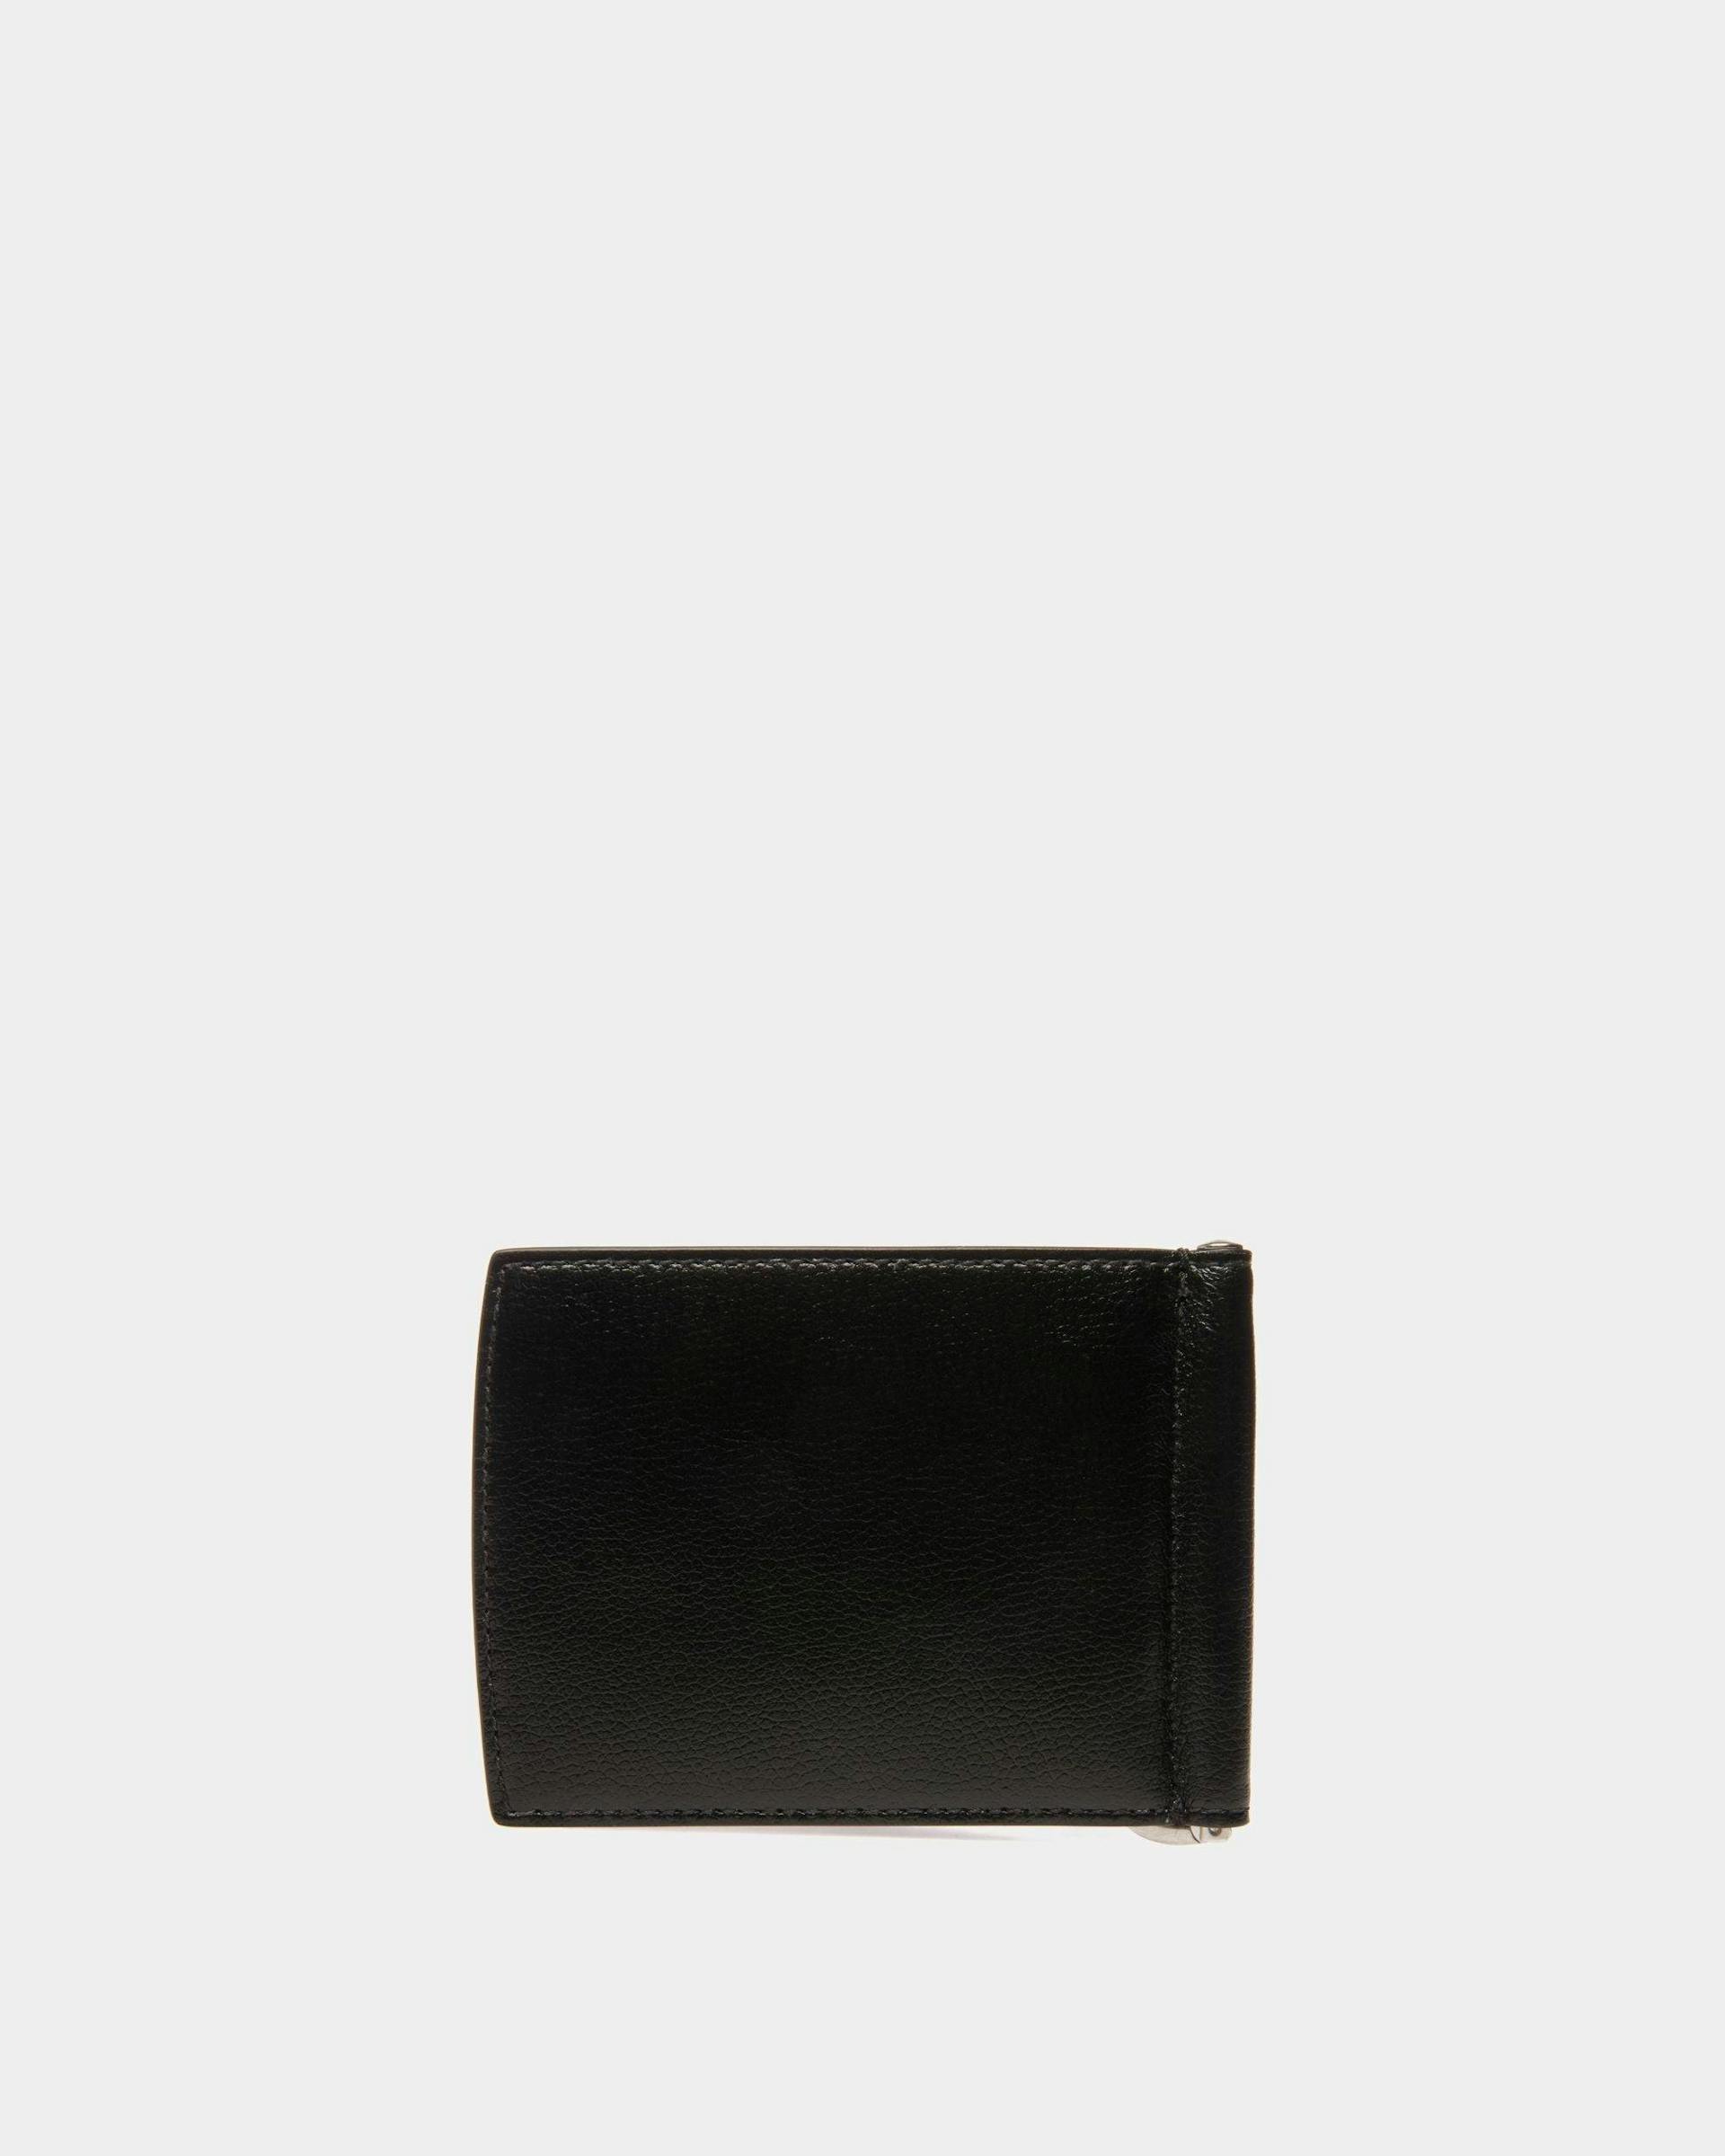 Men's Banque Wallet In Black Leather | Bally | Still Life Back